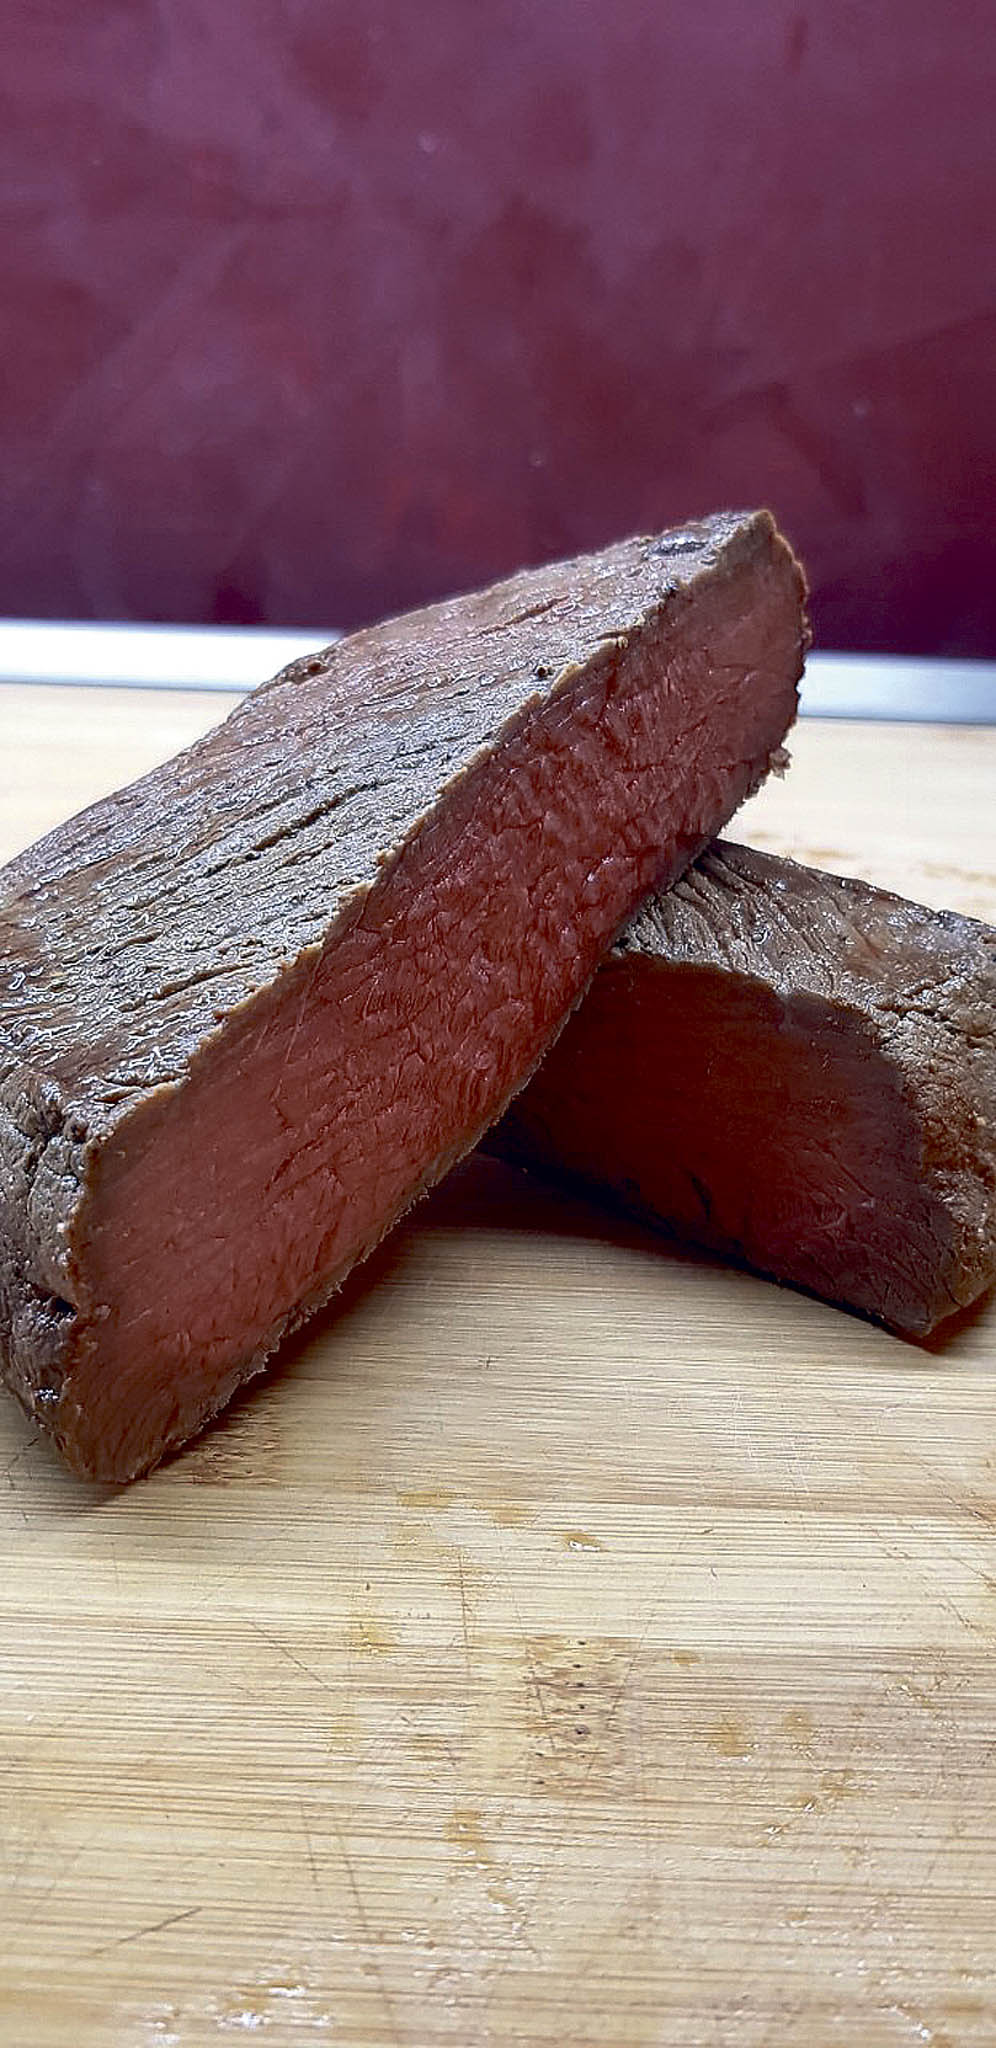 V restauraci Rustikal pou��vaj� hov�z� z vlastn�ho chovu, na steaky pak sta�en� maso. (Foto: archiv restaurace)